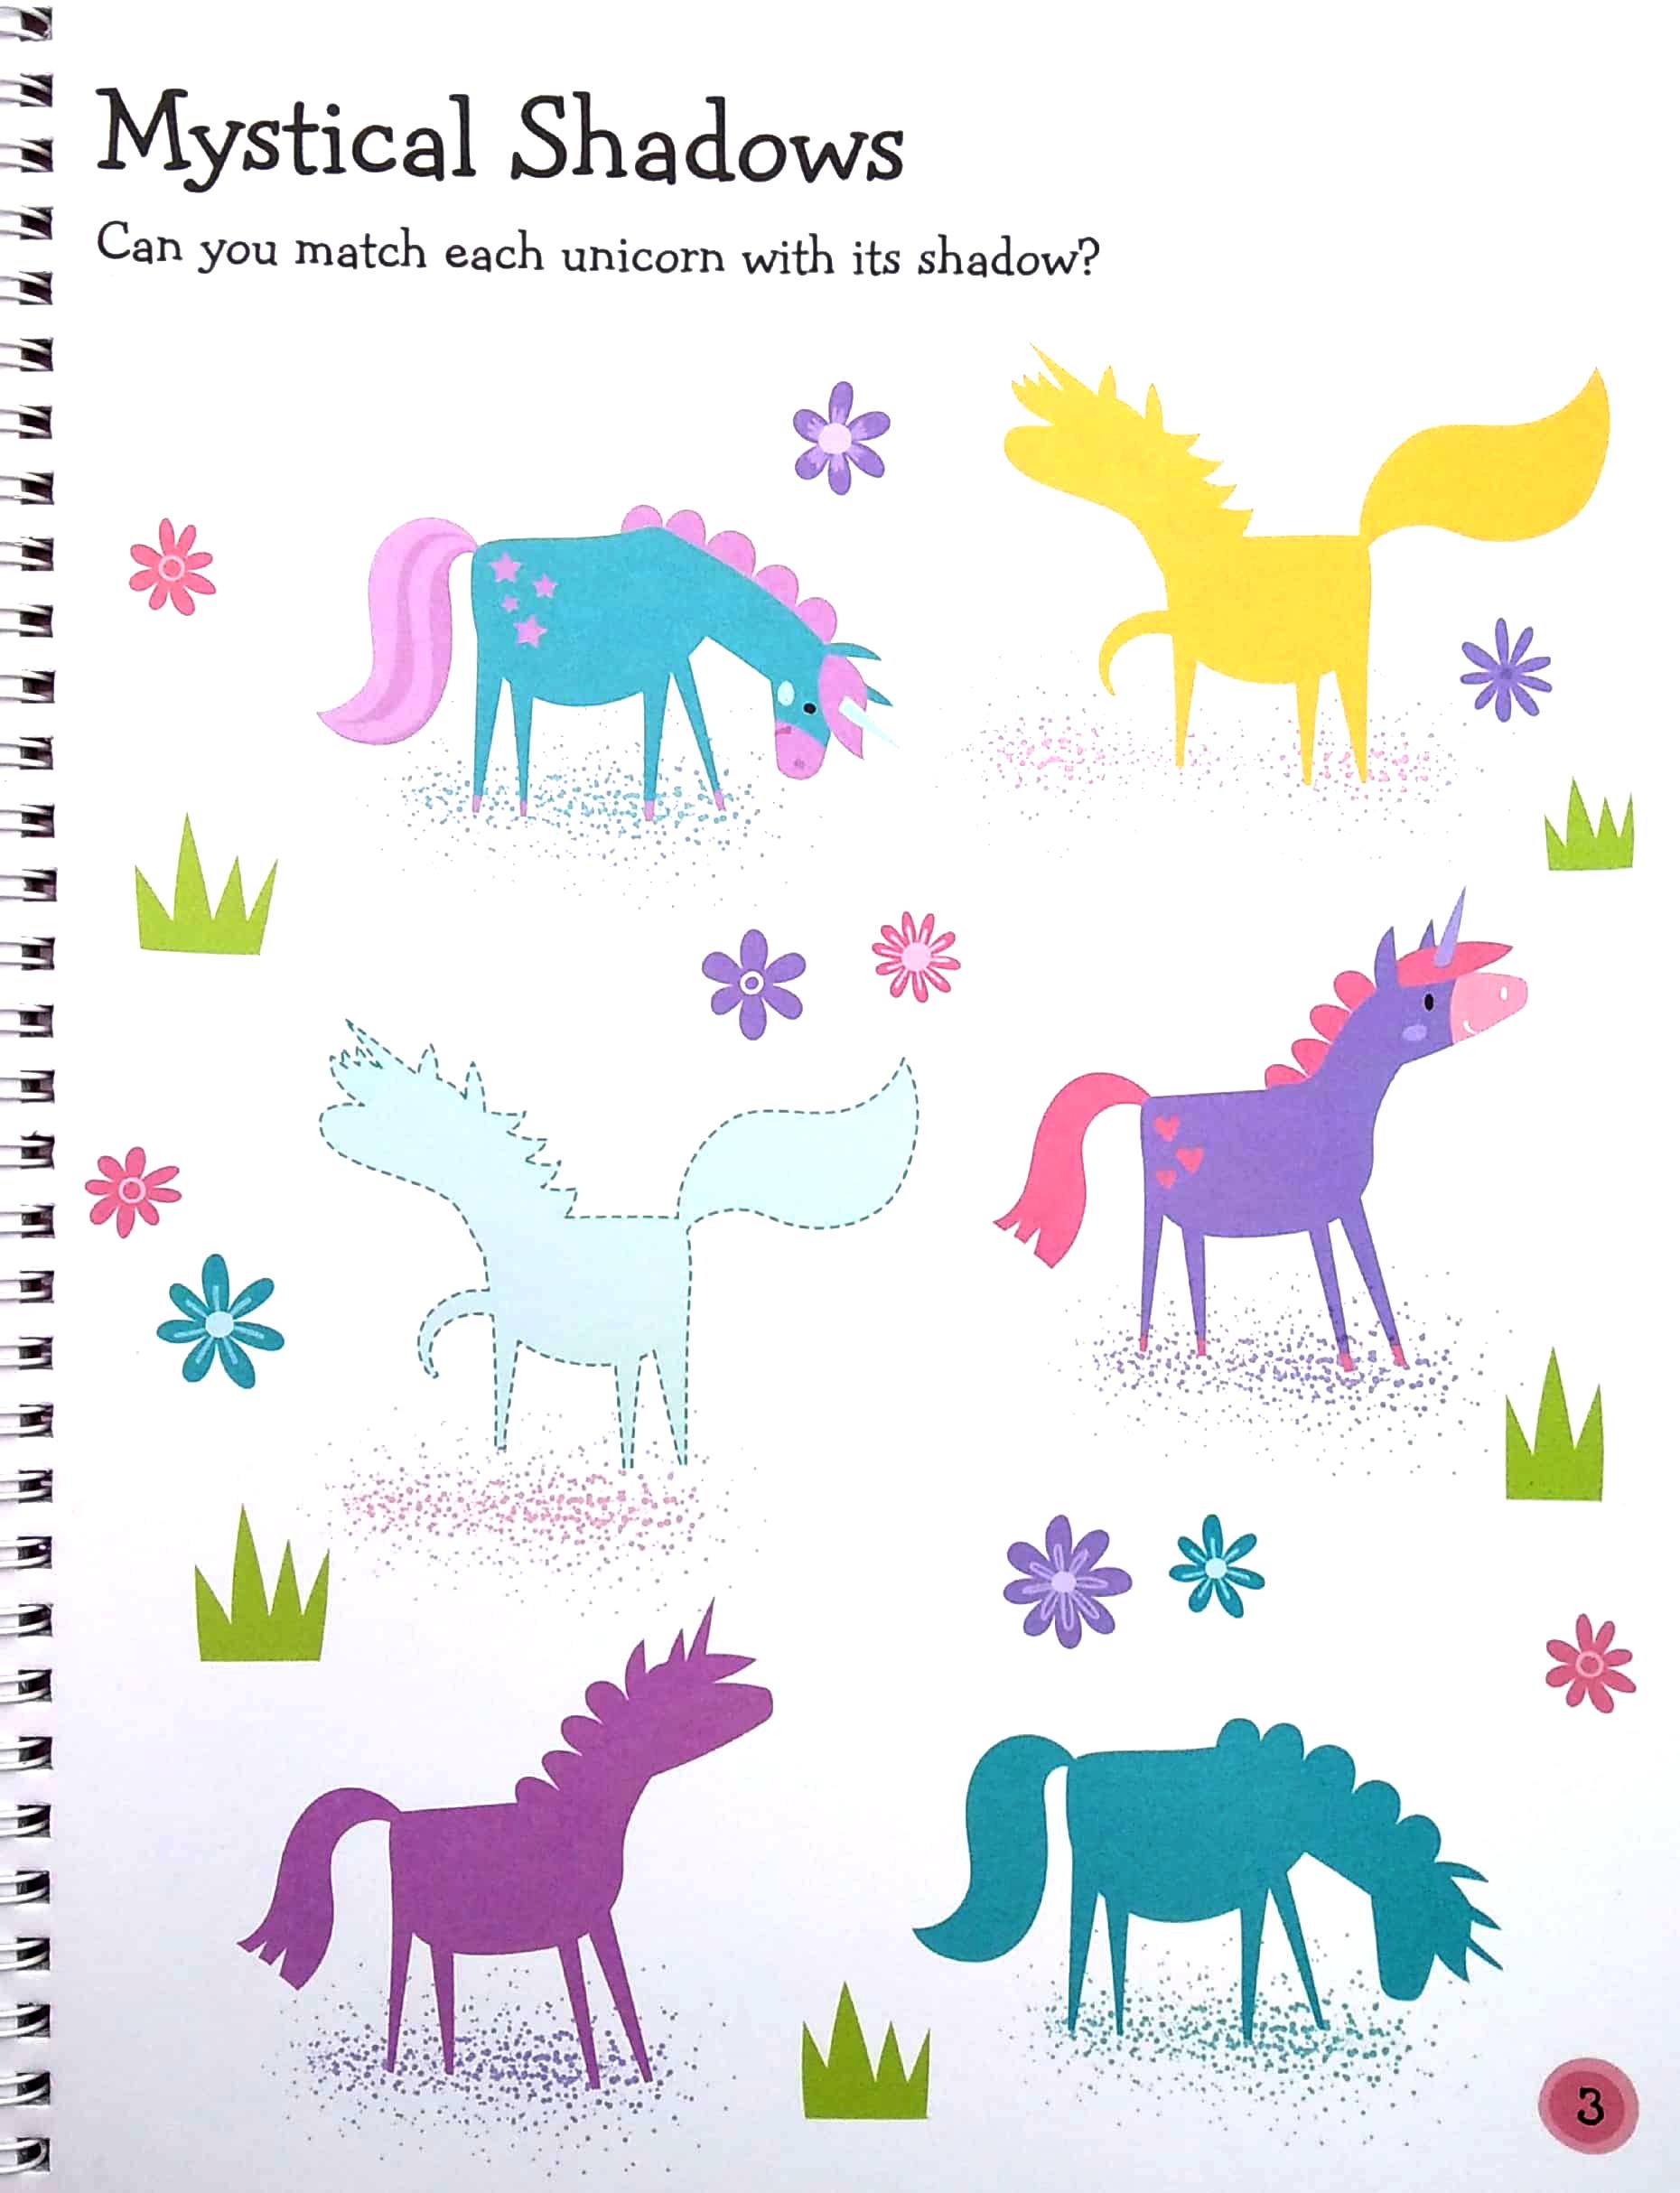 Big Sticker Activity - Unicorns